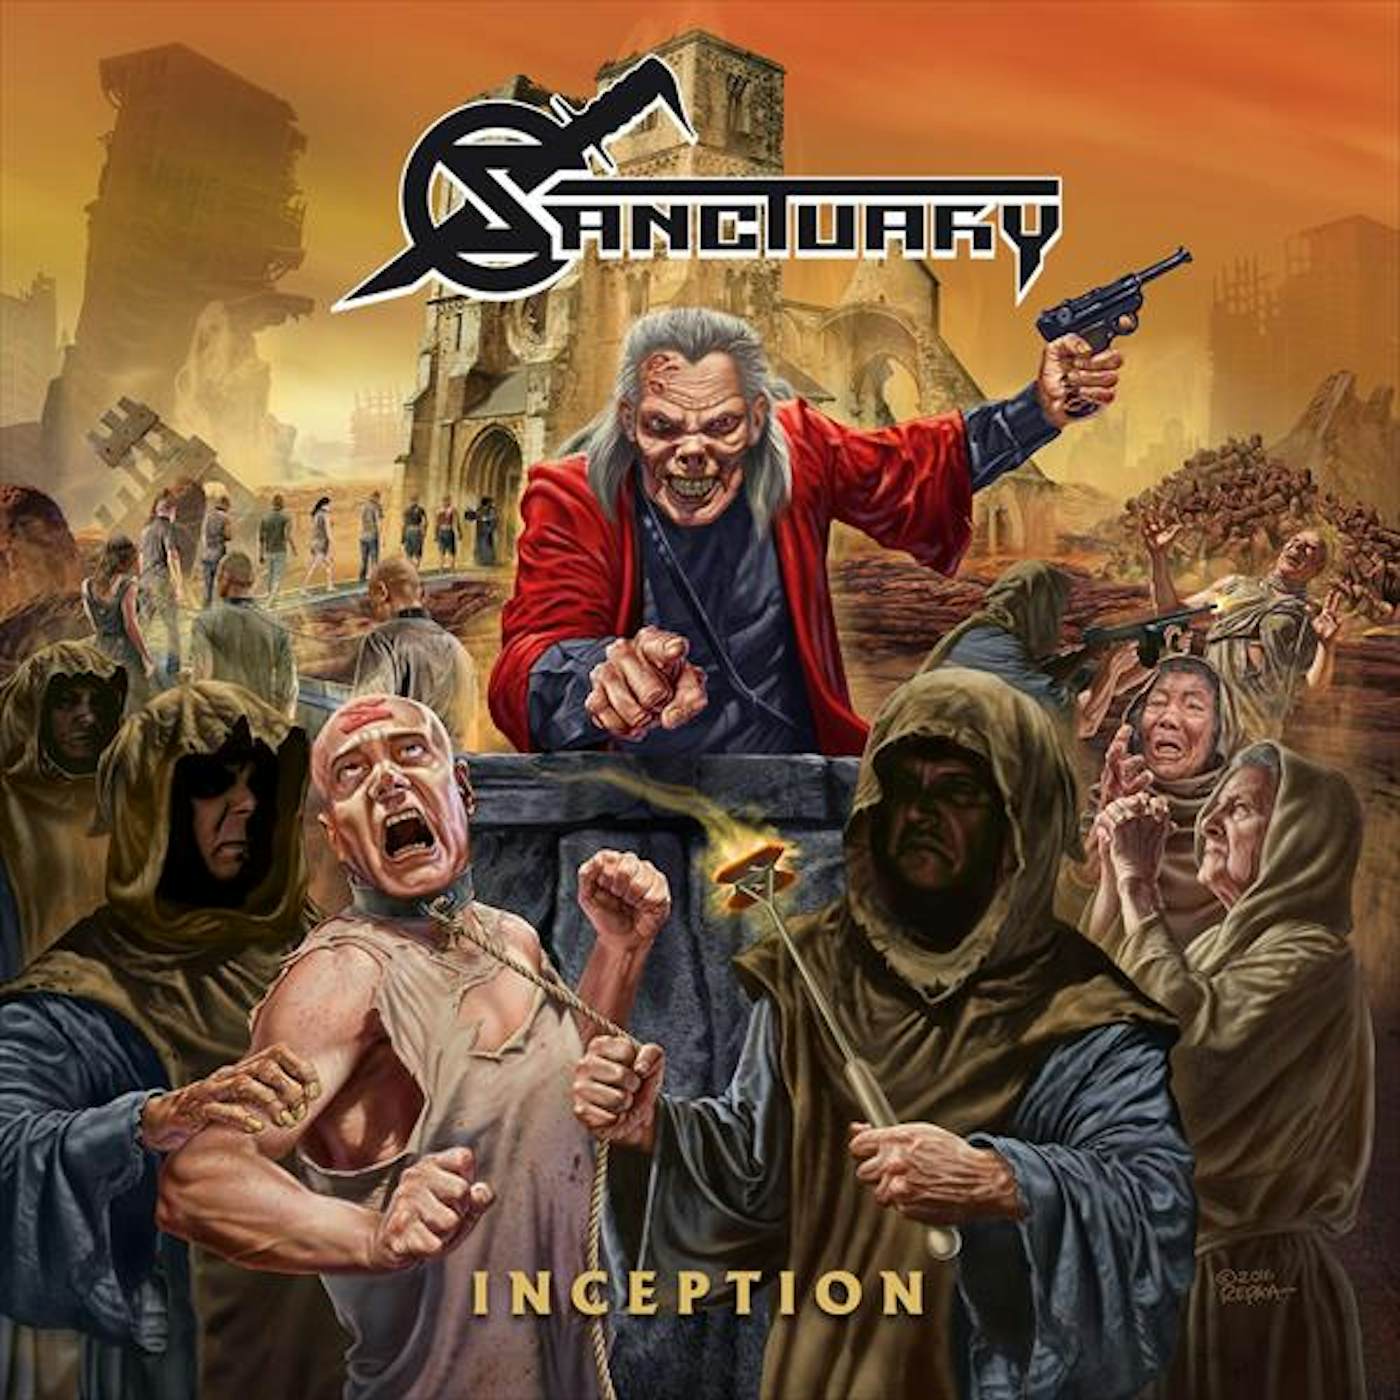 Sanctuary INCEPTION Vinyl Record - Gold Disc